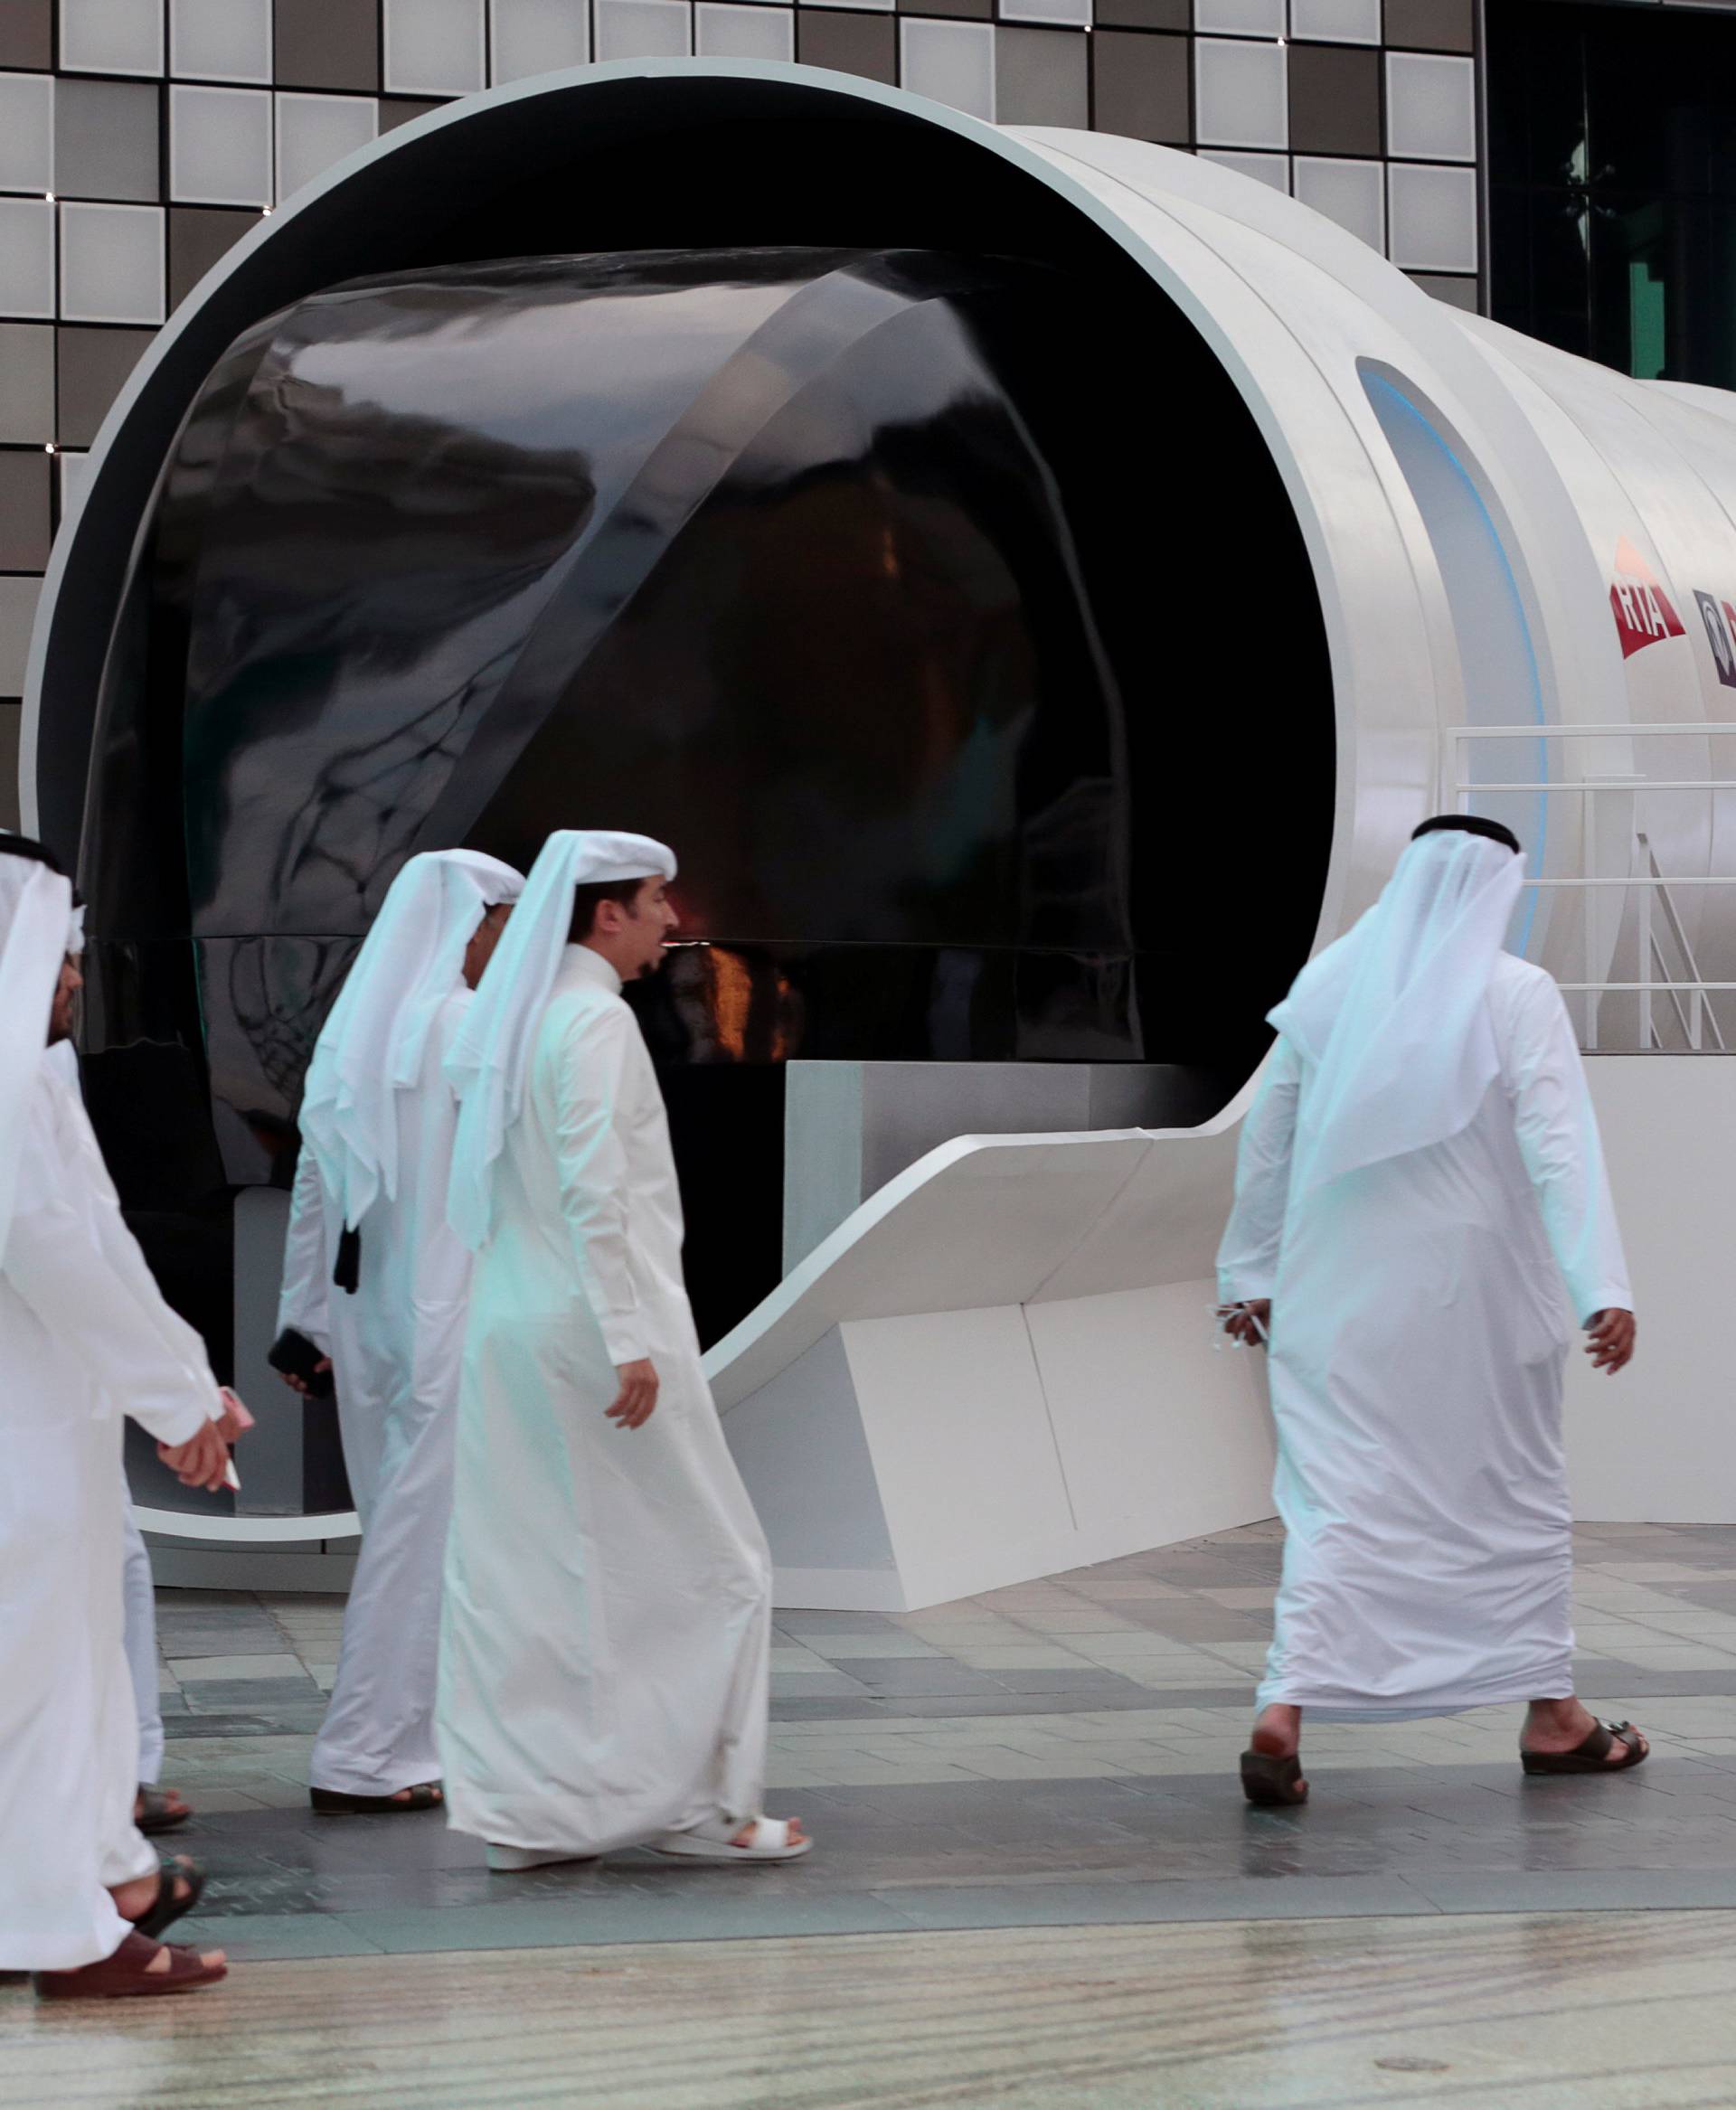 RTA unveil the design model of the hyperloop in Dubai